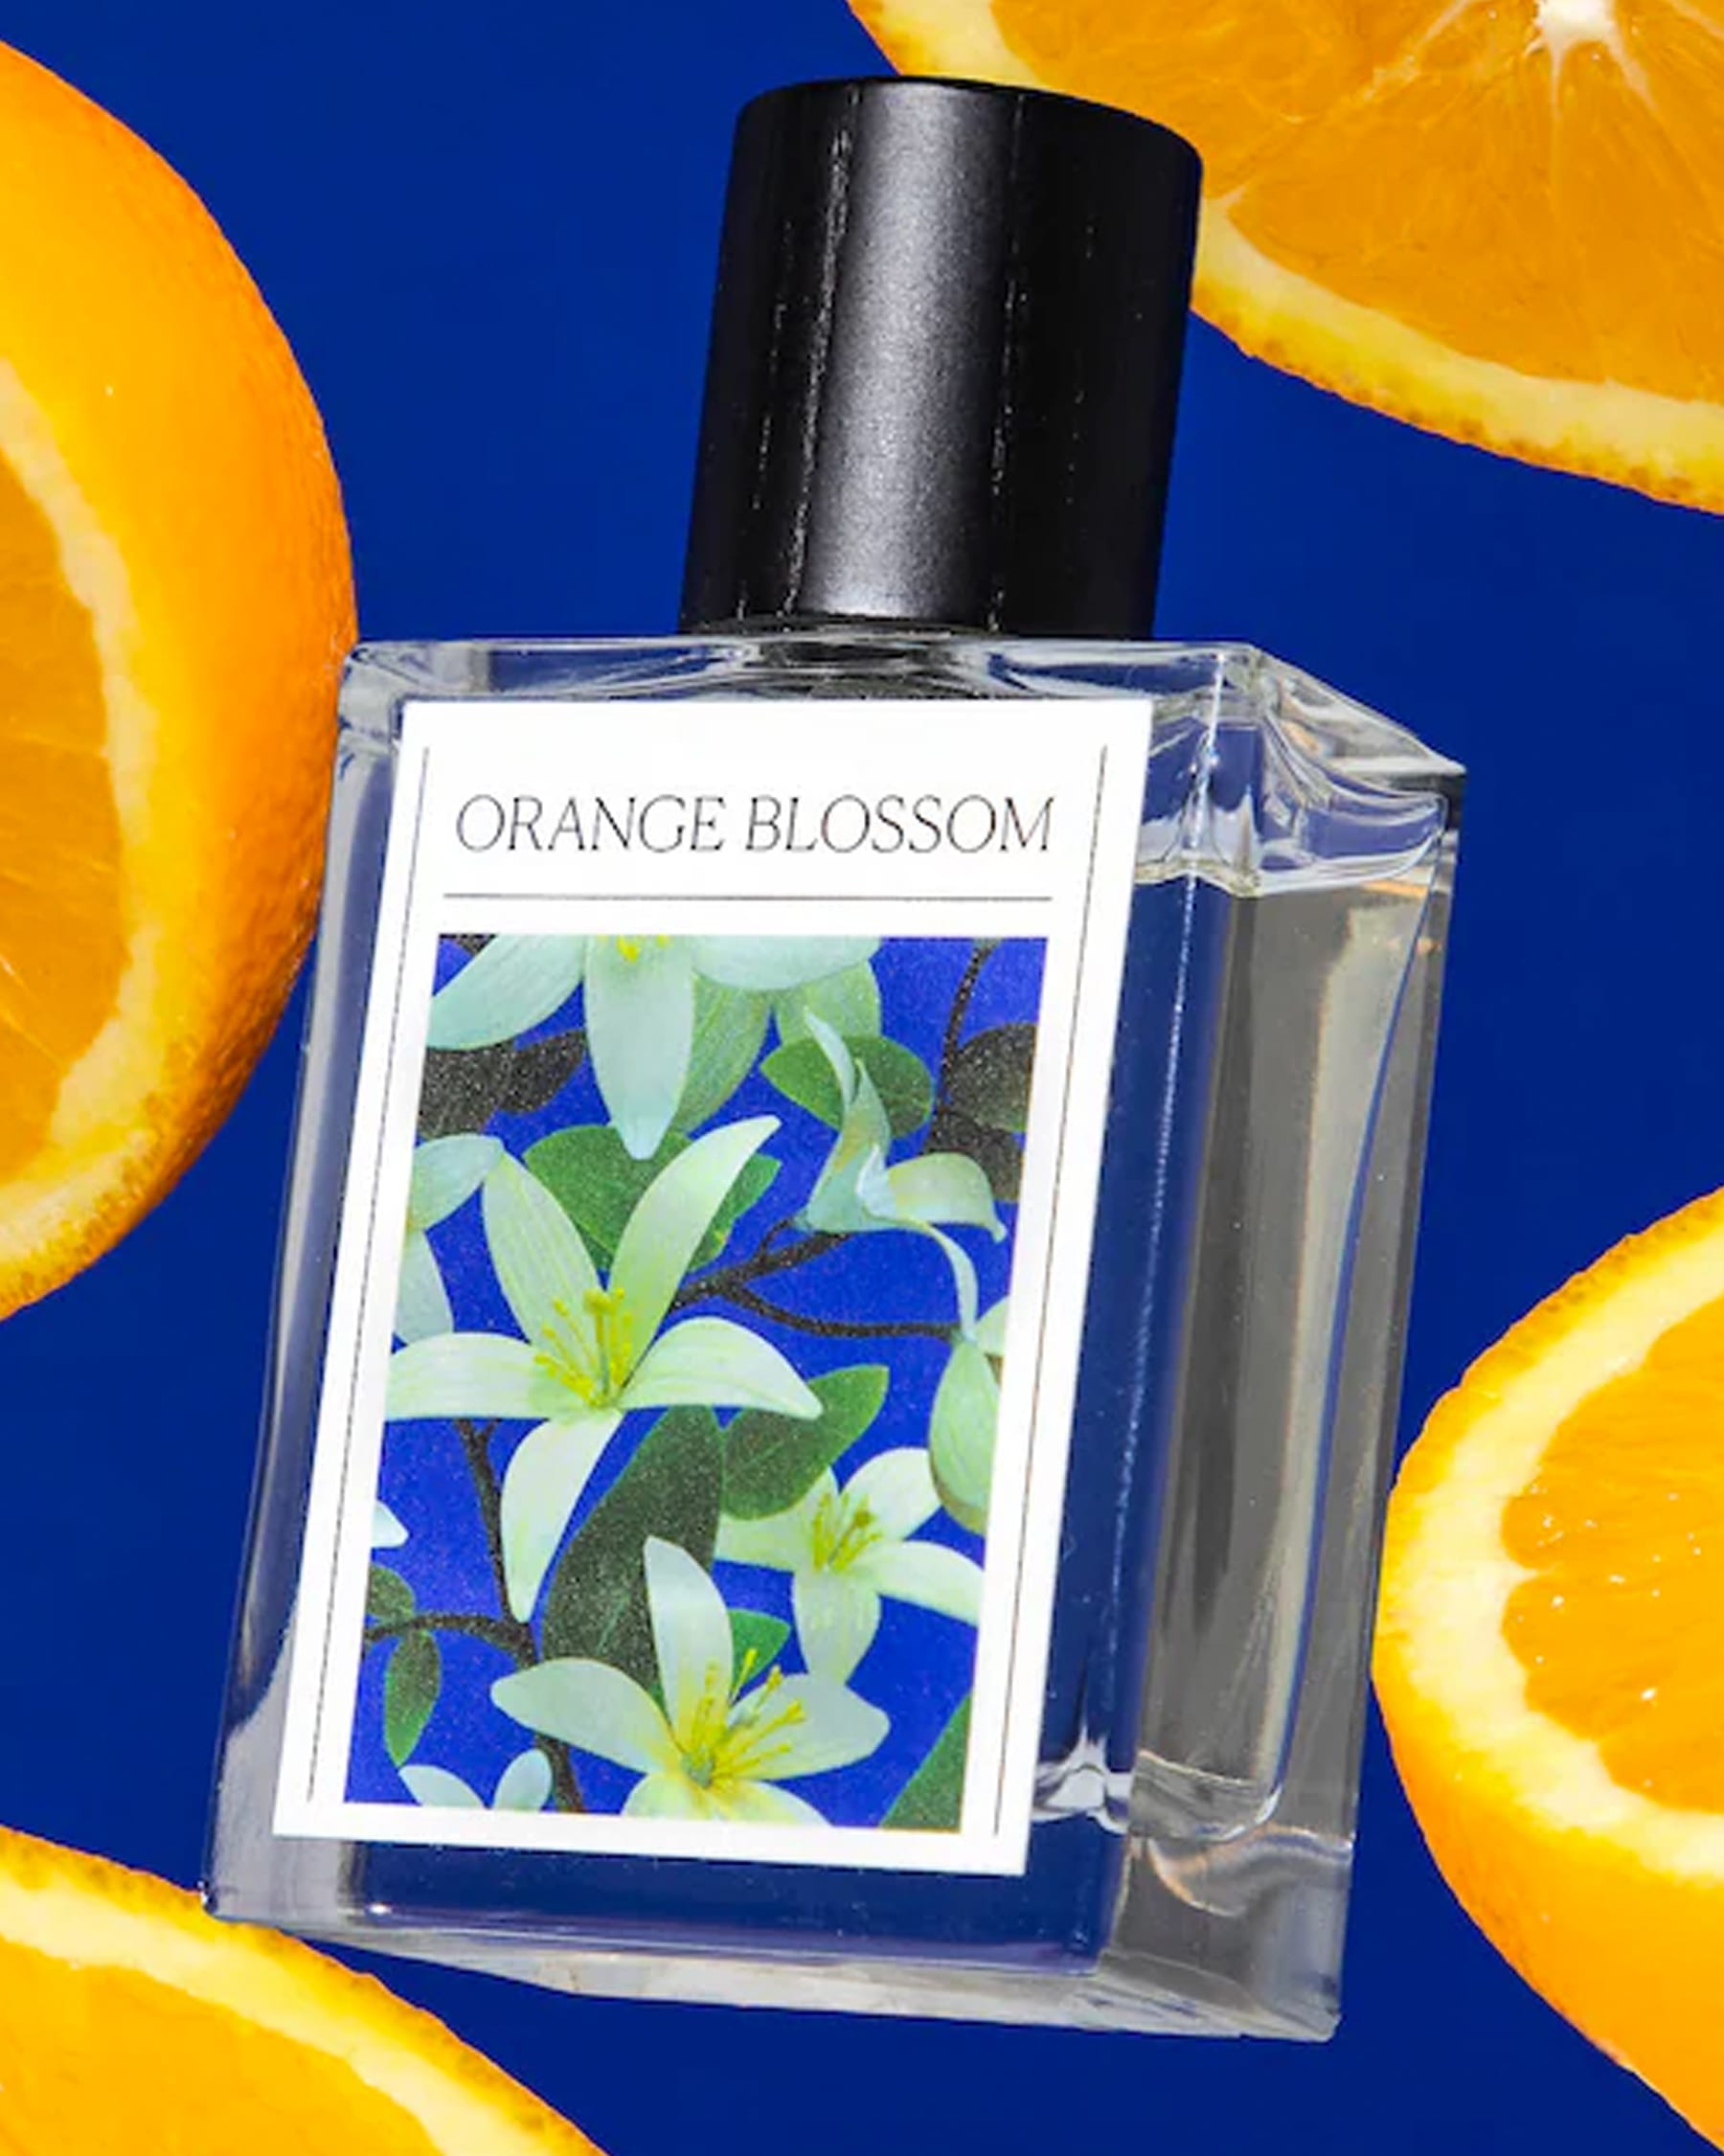 Orange blossom perfume